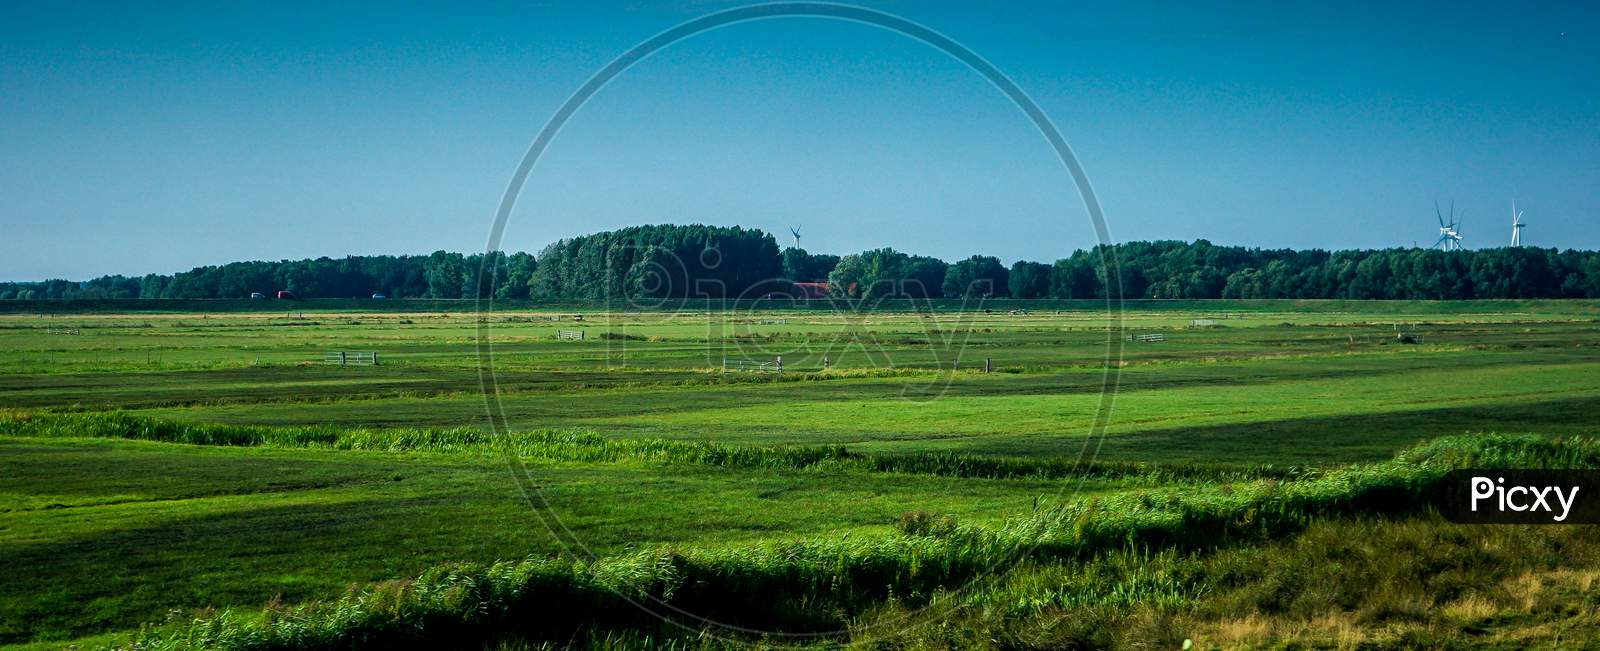 Netherlands, South Holland, A Herd Of Sheep Walking Across A Lush Green Field